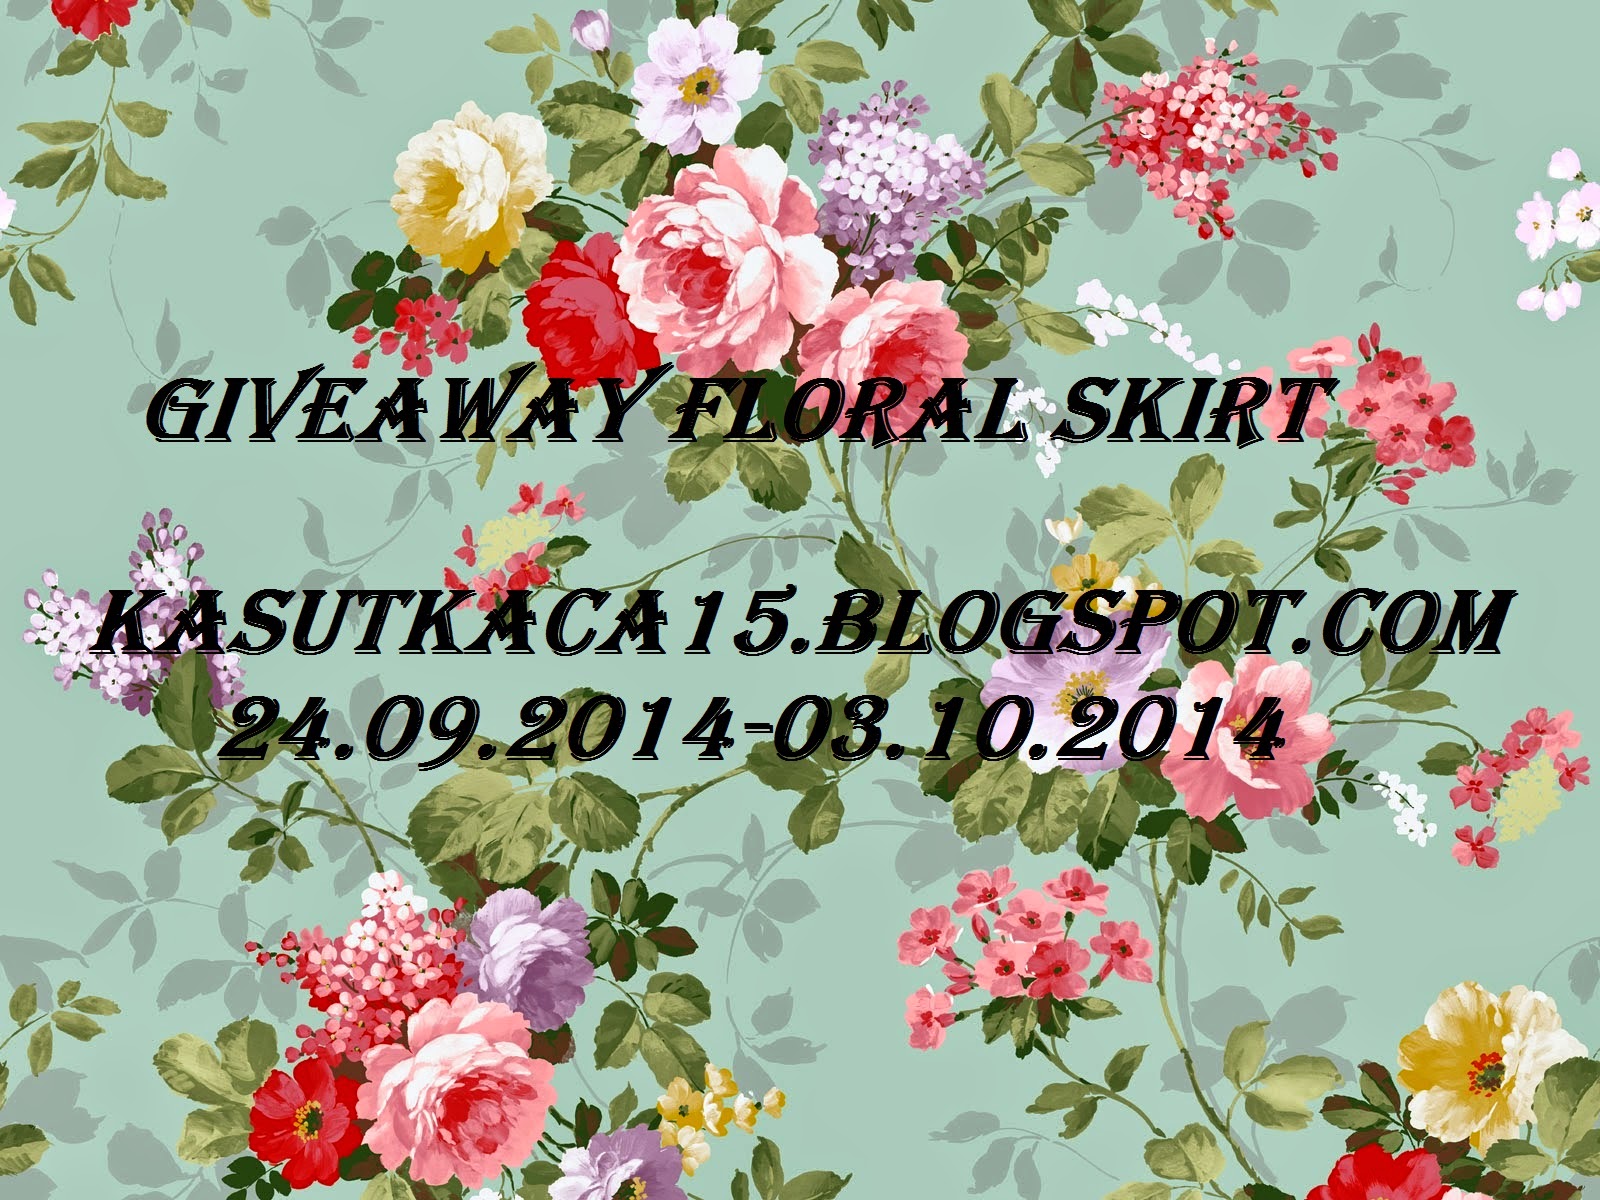 http://kasutkaca15.blogspot.com/2014/09/giveaway-floral-skirt.html